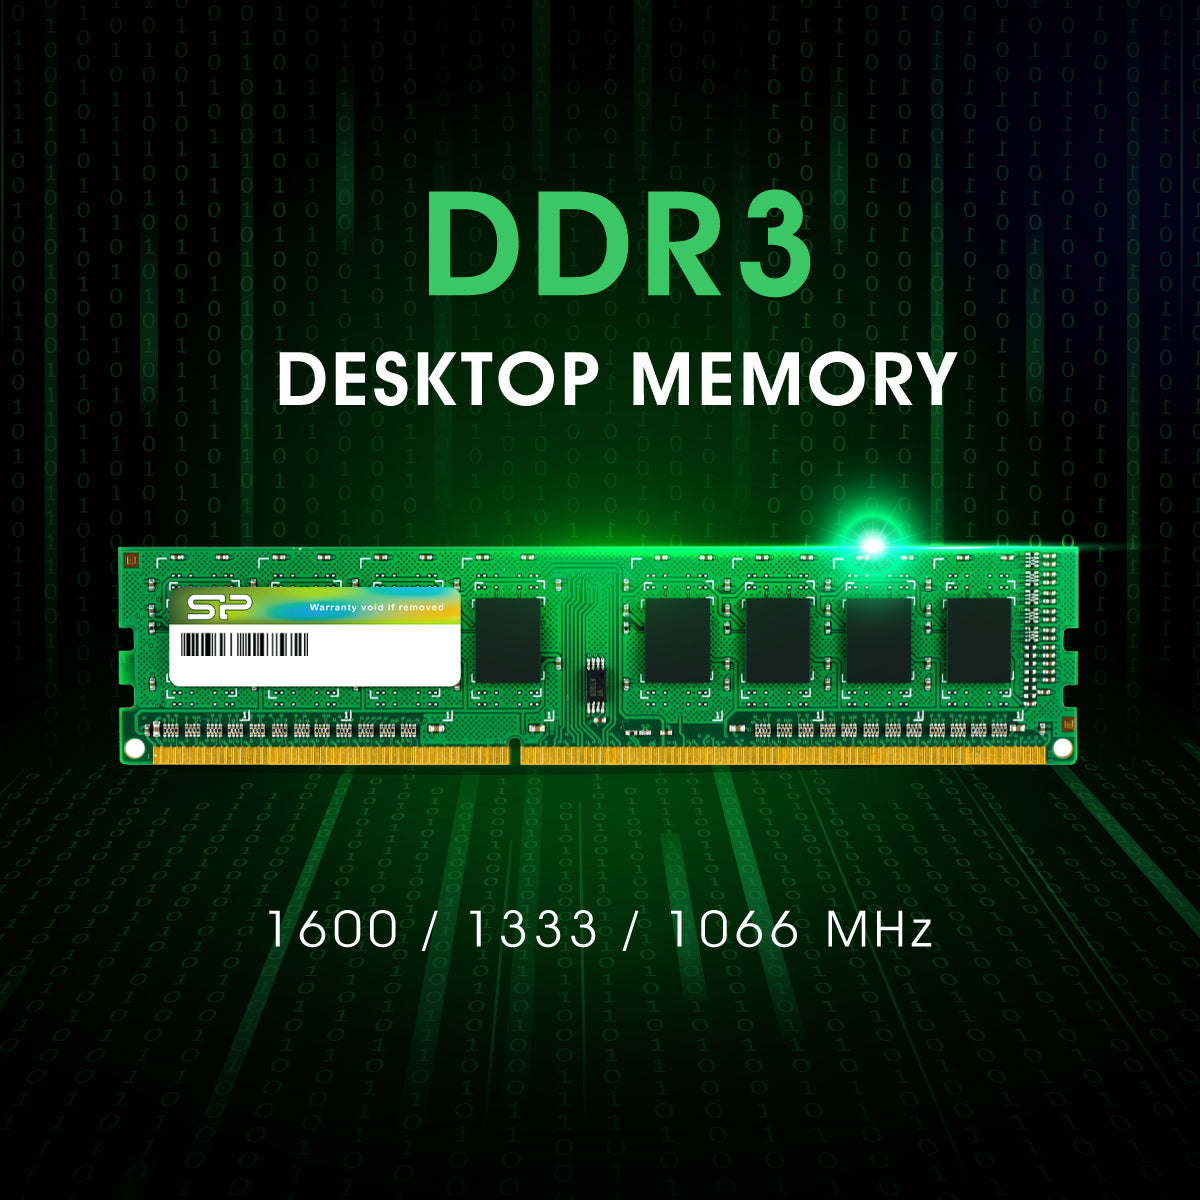 Silicon Power DDR3L 8GB 1600MT/s (PC3L-12800) 1.35V Desktop UDIMM